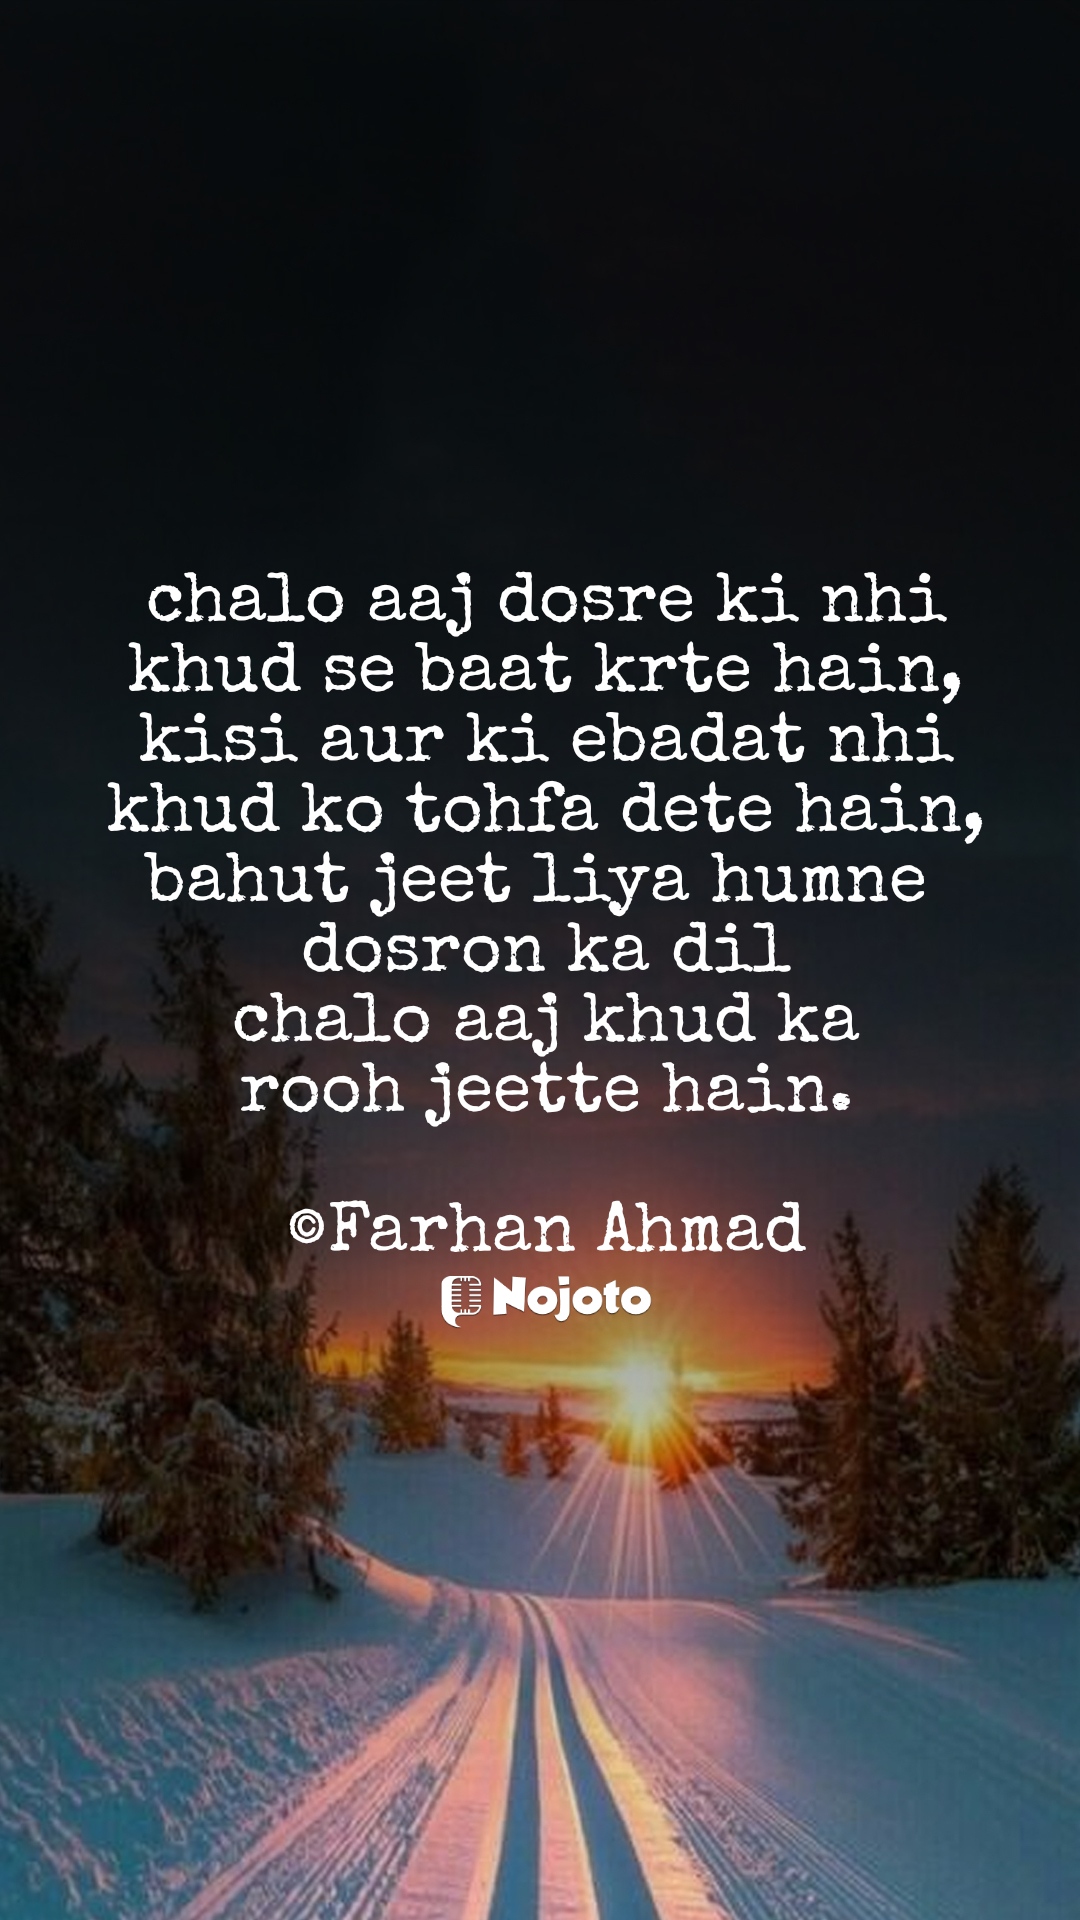 #WinterSunset #positive #Self #Love #Attitude #urdu #Shayari 
#Nojoto #me #Poetry 